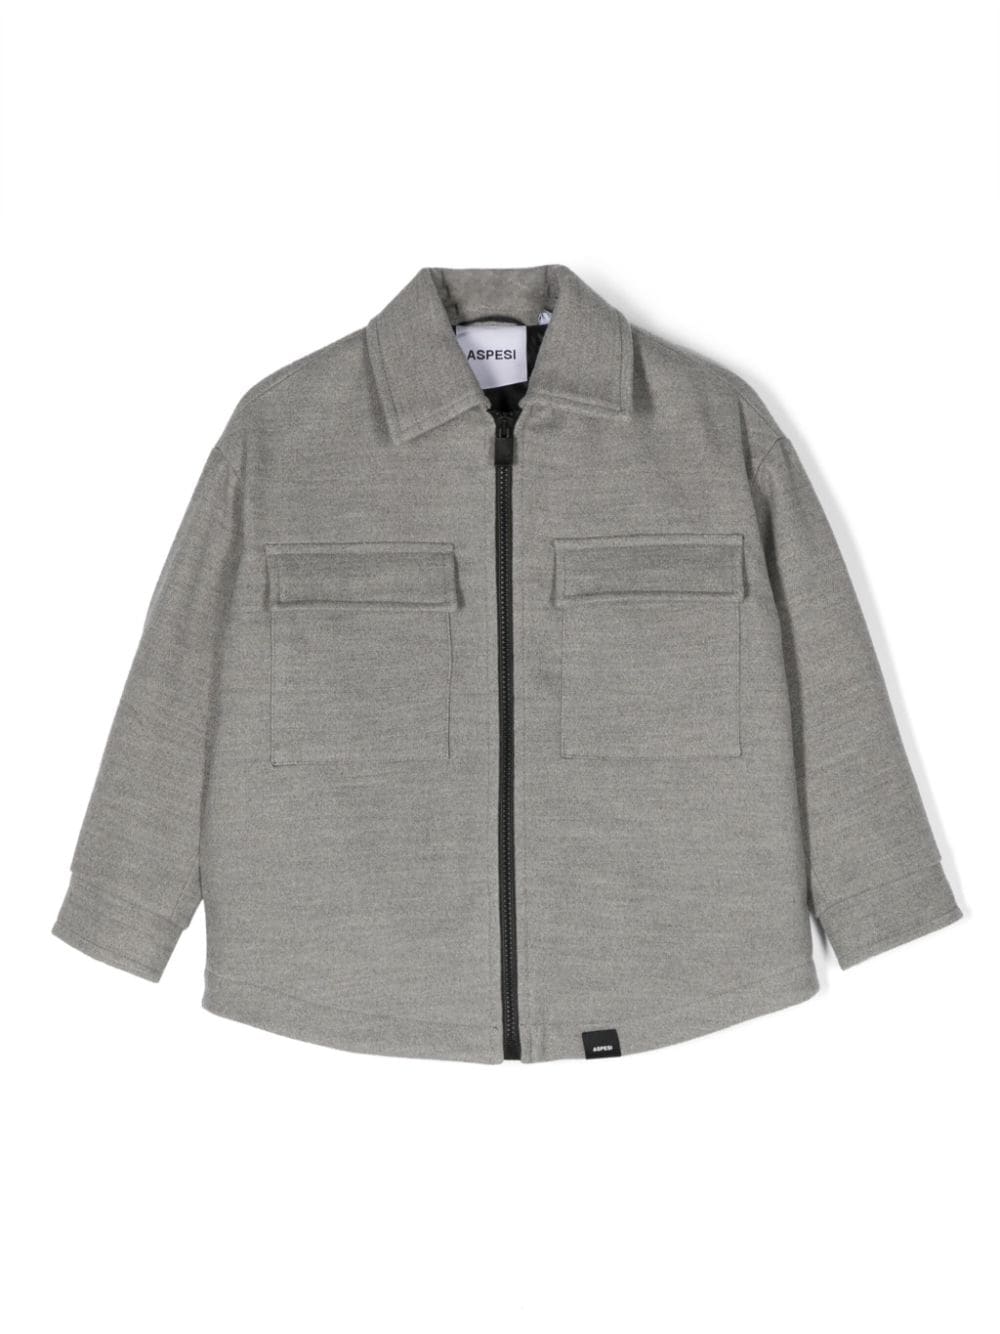 Aspesi Kids mélange-effect zip-up shirt jacket - Grey von Aspesi Kids